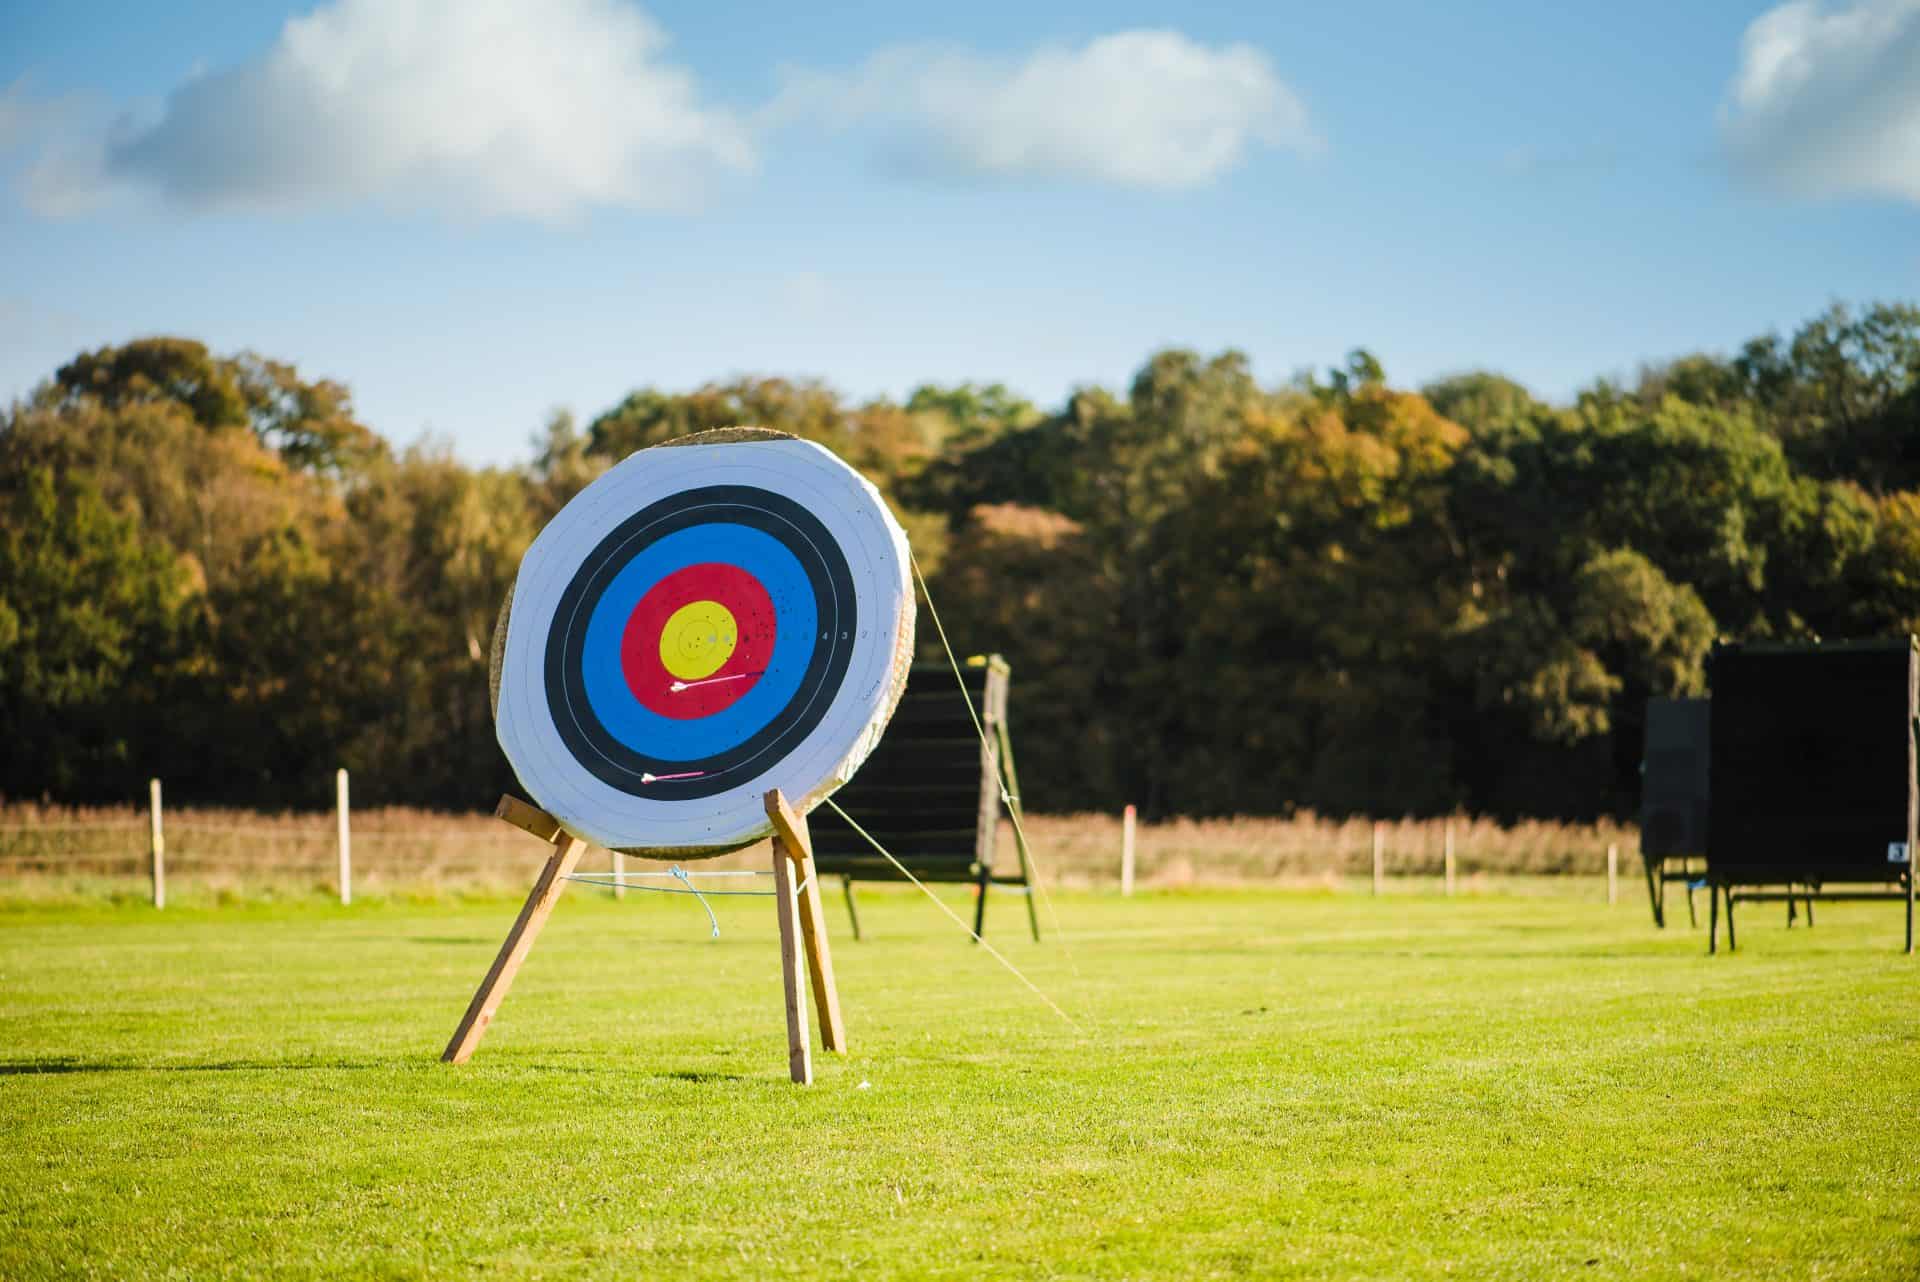 Target on outdoor archery range